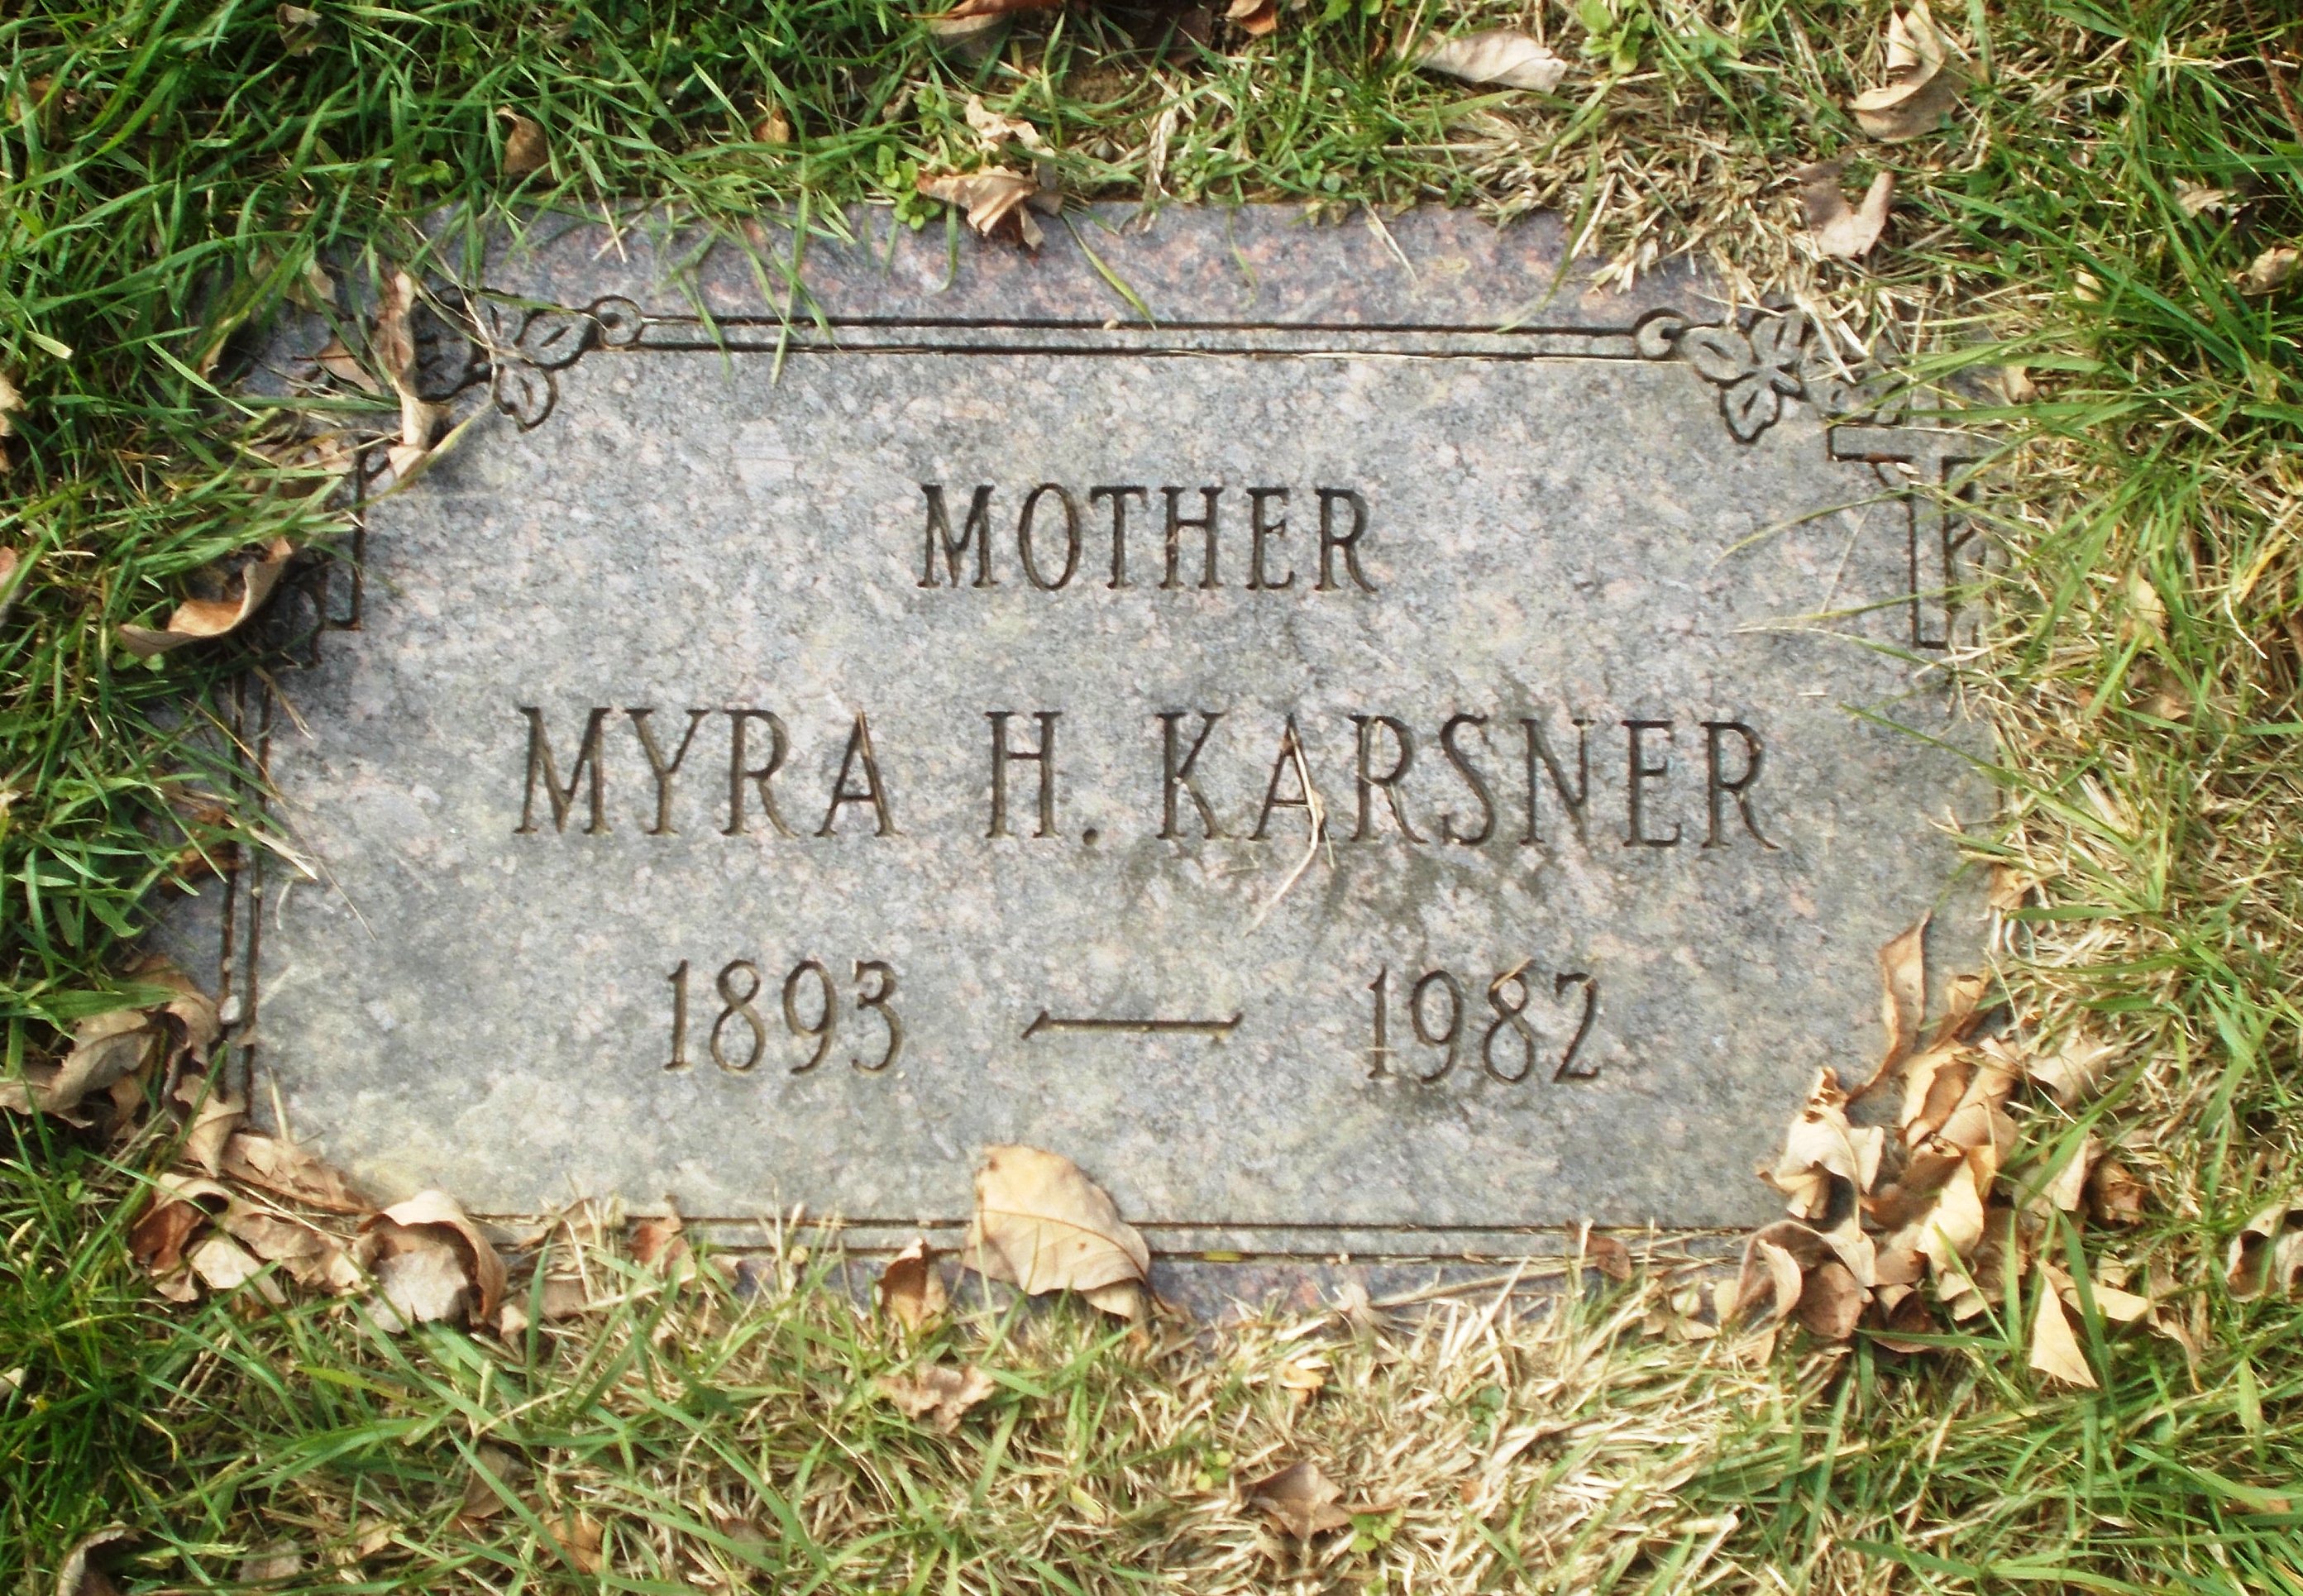 Myra H Karsner